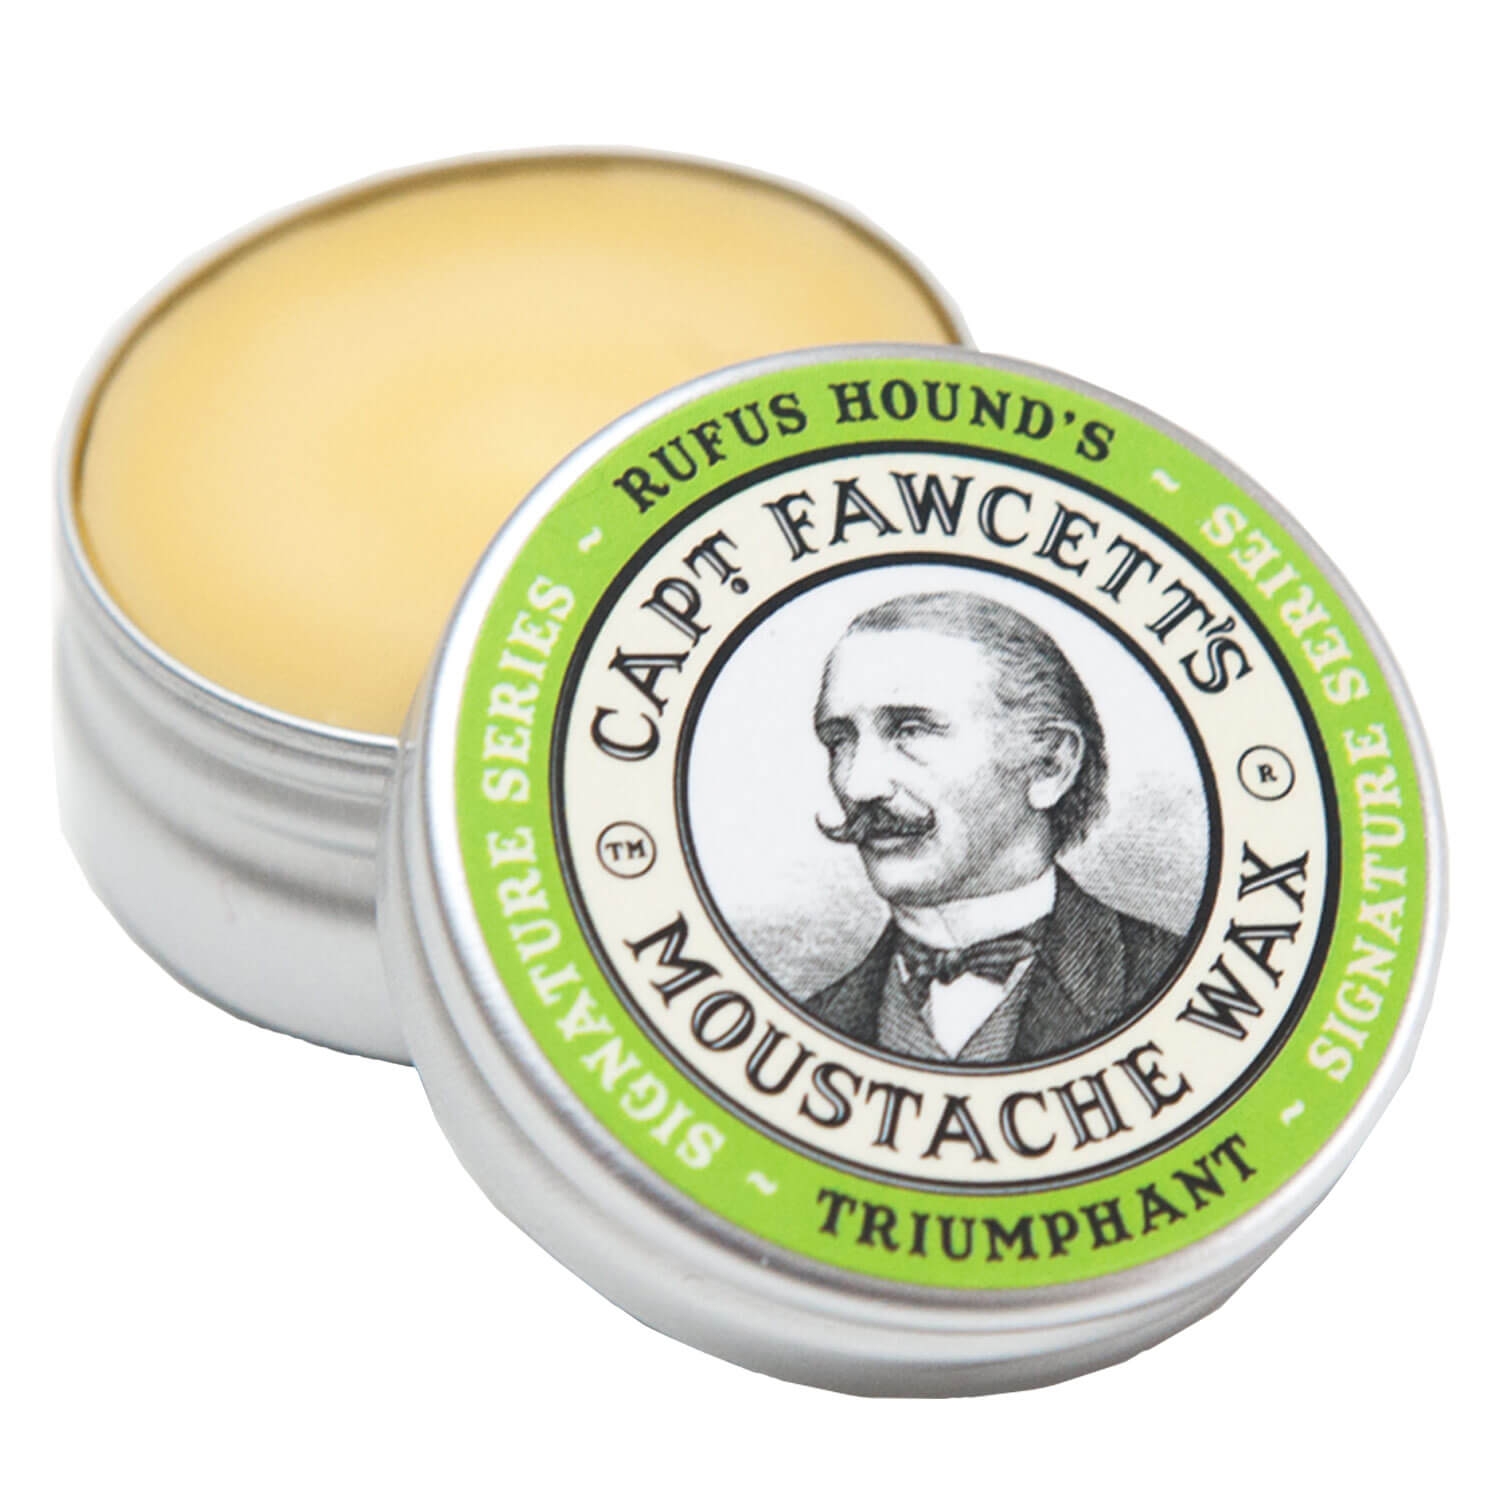 Product image from Capt. Fawcett Care - Triumphant Moustache Wax